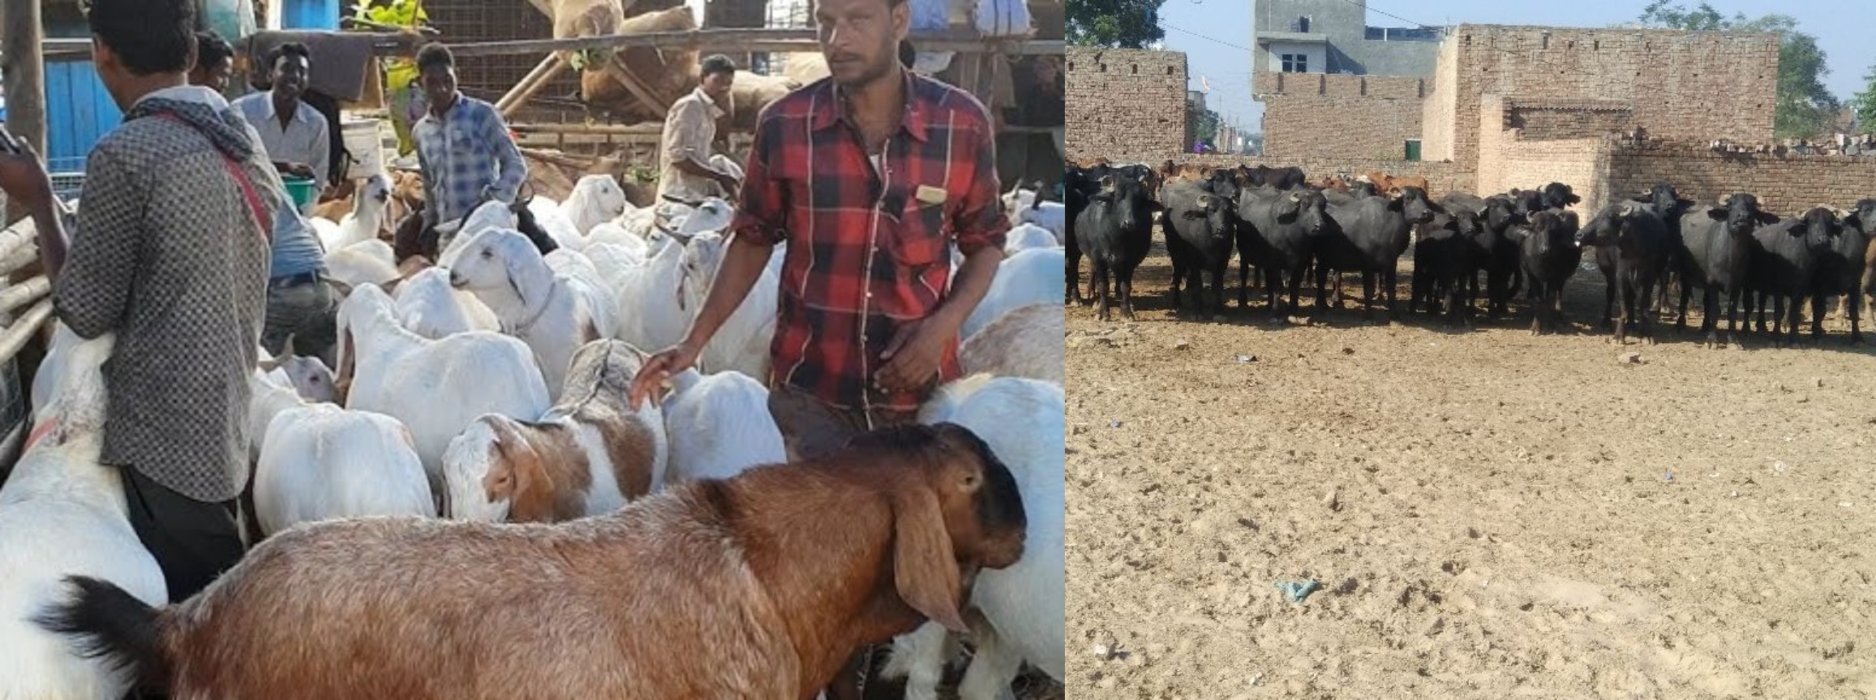 Buffaloes were sacrificed not goats in Meerut on Bakrid